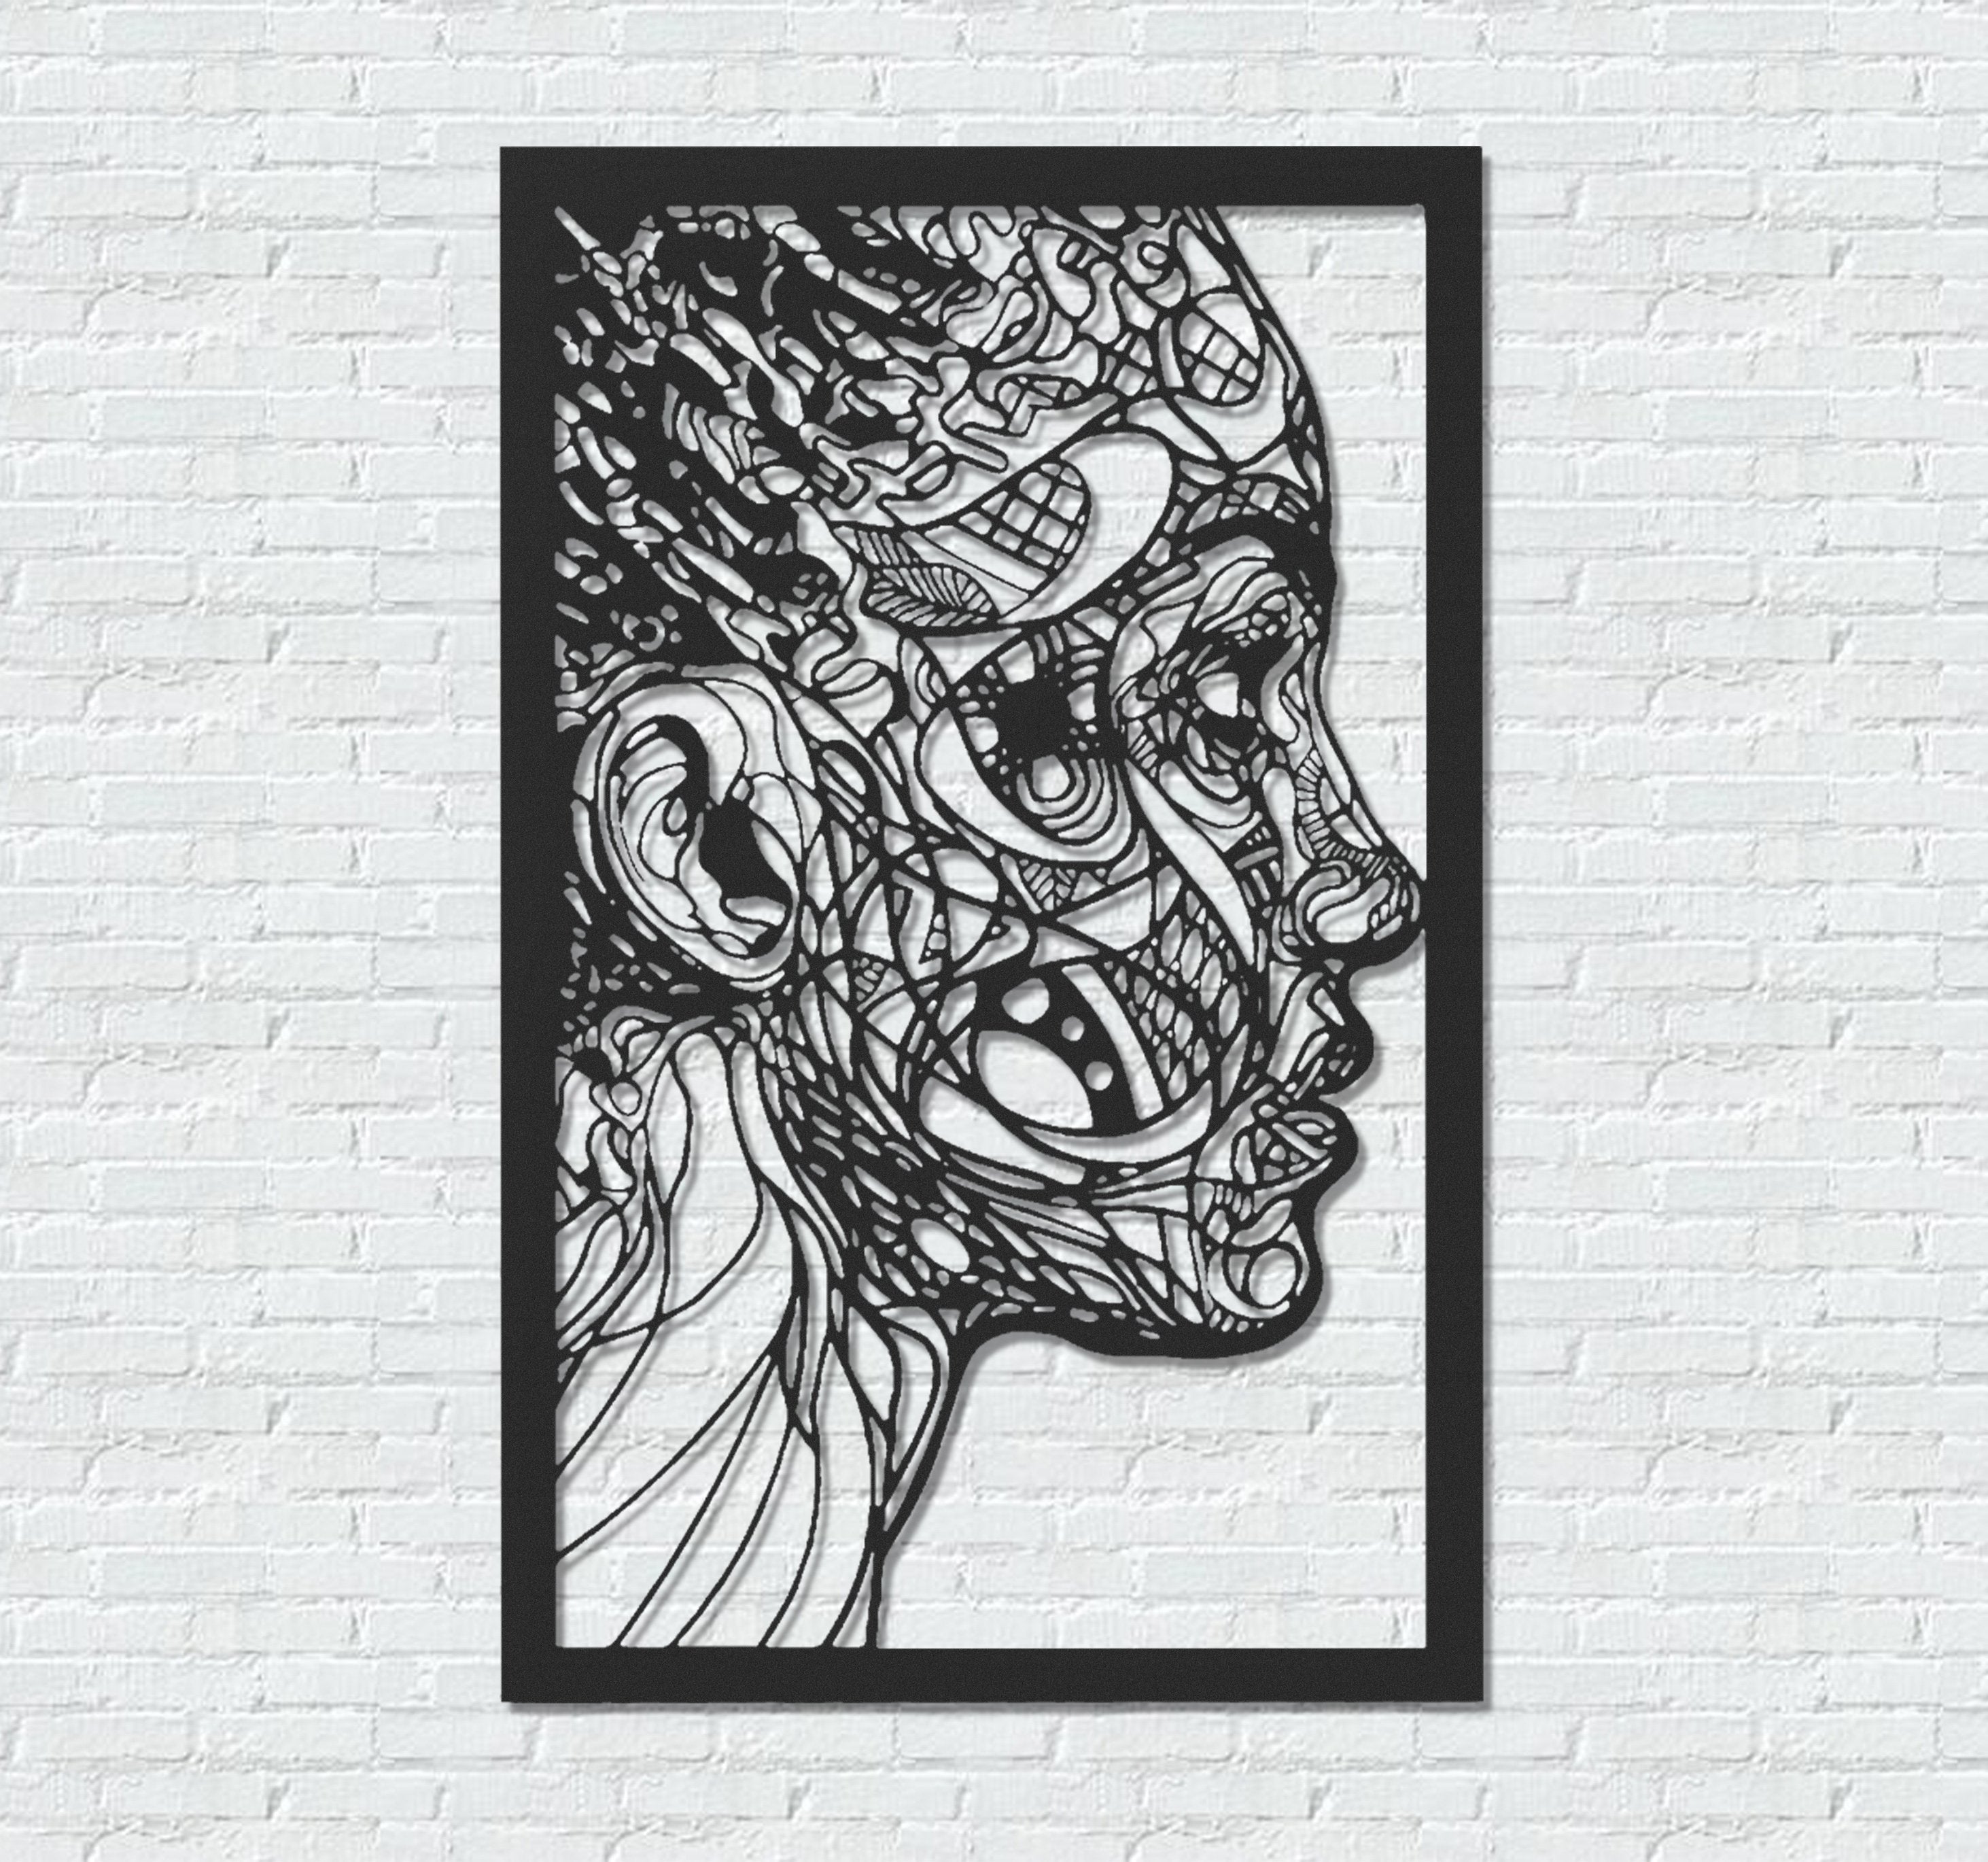 ・"Theadora"・Premium Metal Wall Art - Limited Edition